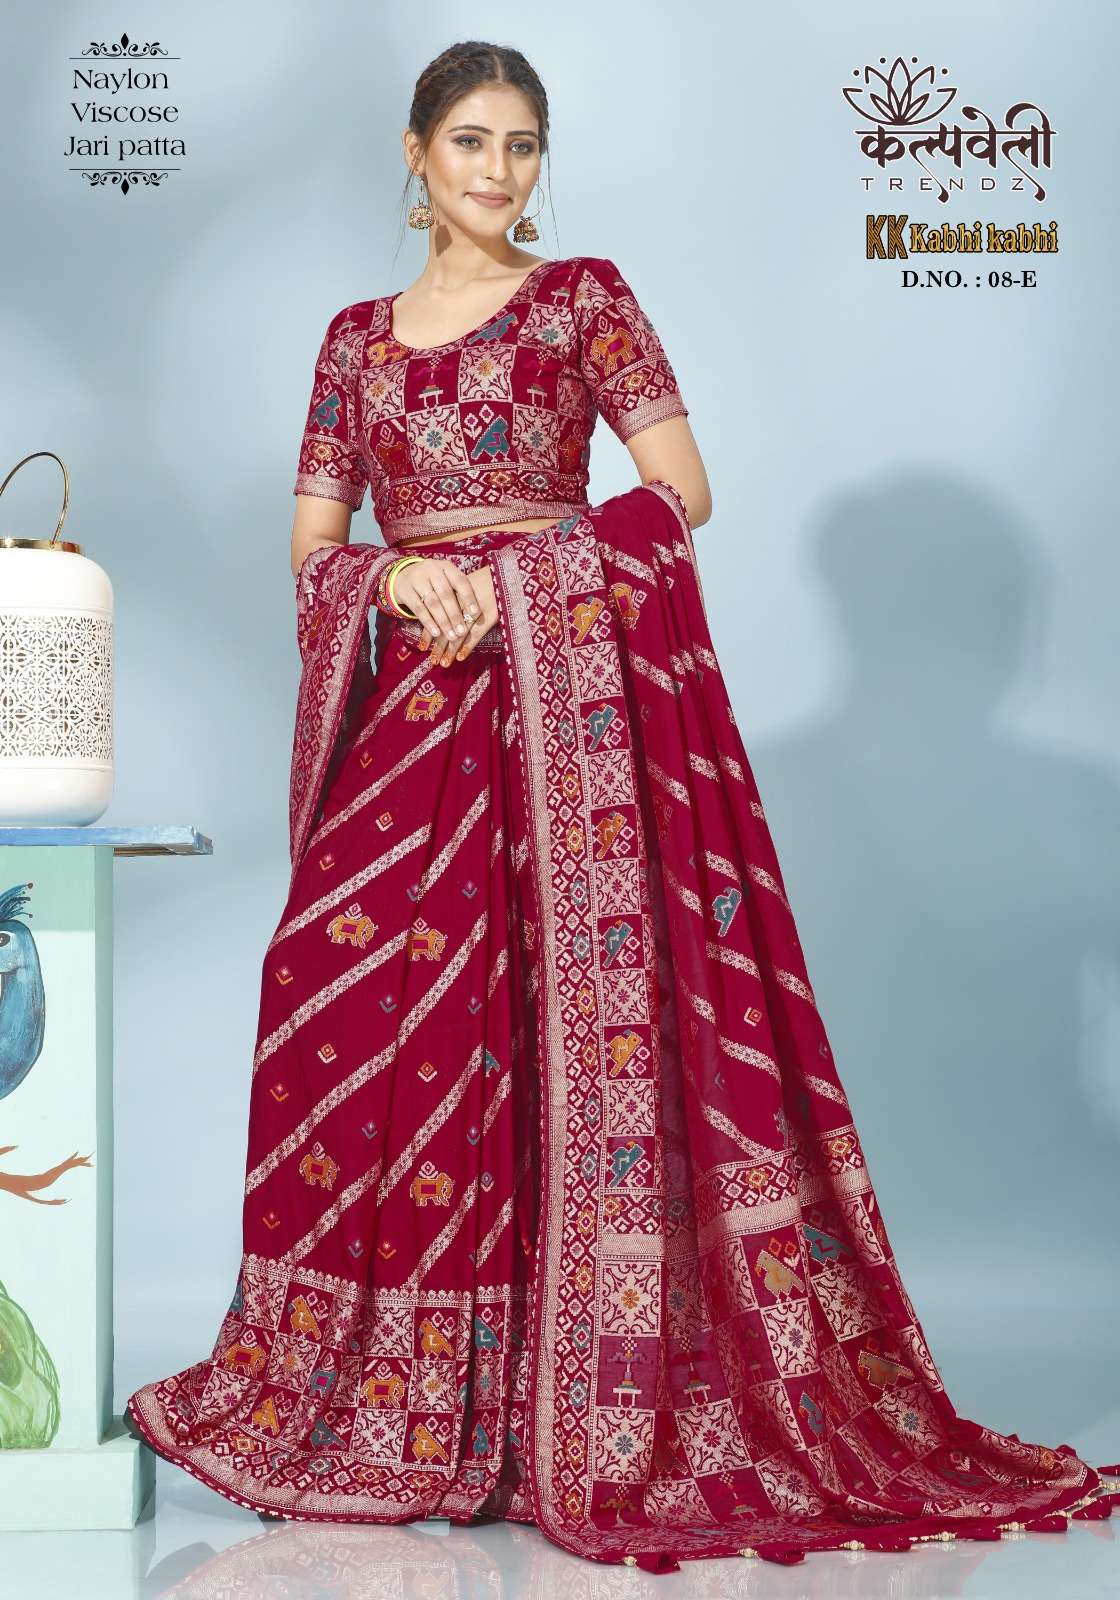 kalpavelly trendz kabhi kabhi 8 amazing ajrakh print design saree collection